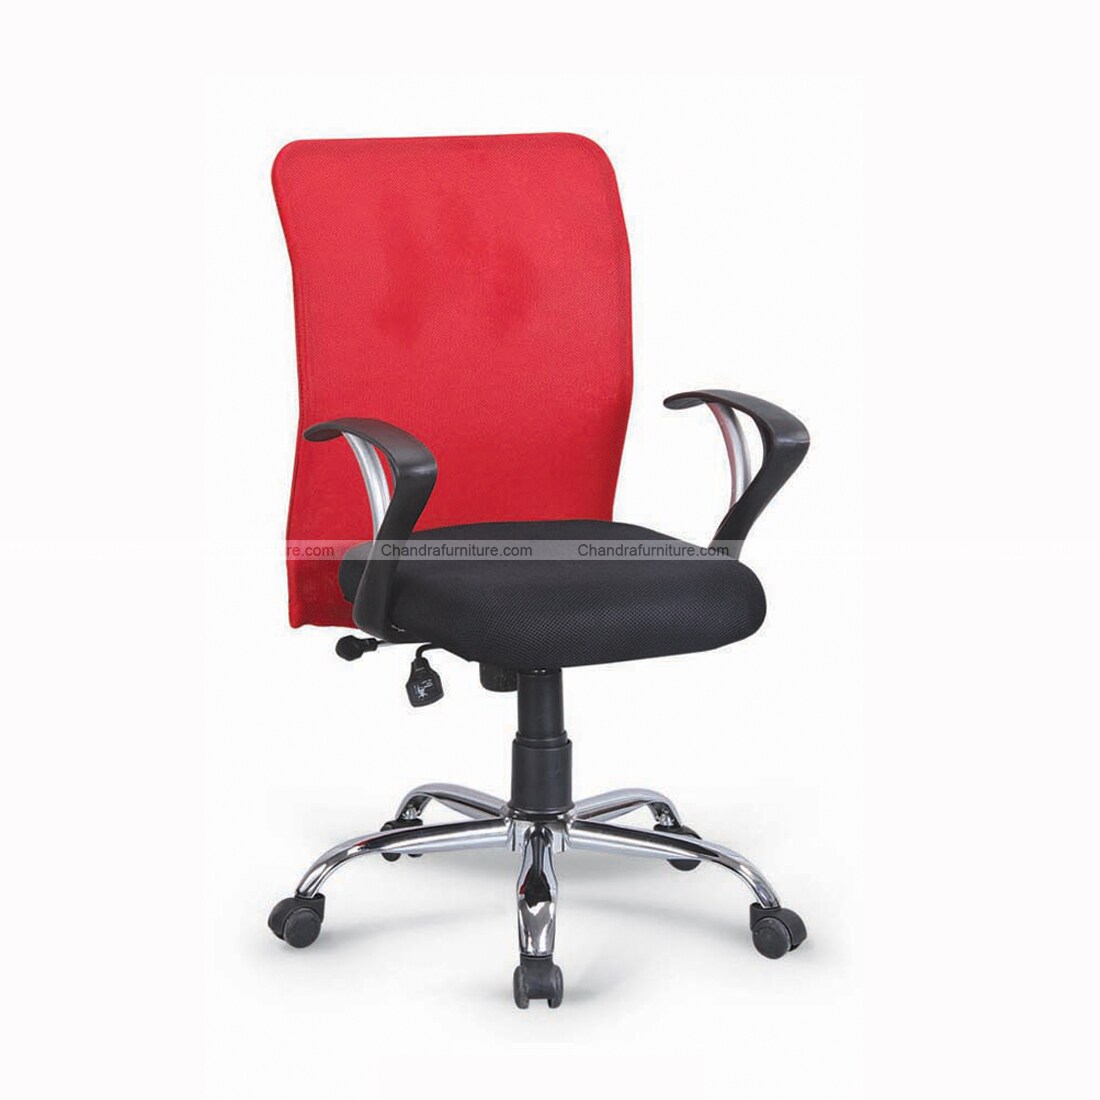  Chandra Furniture  Ezc 277 Office Chair Workstation 